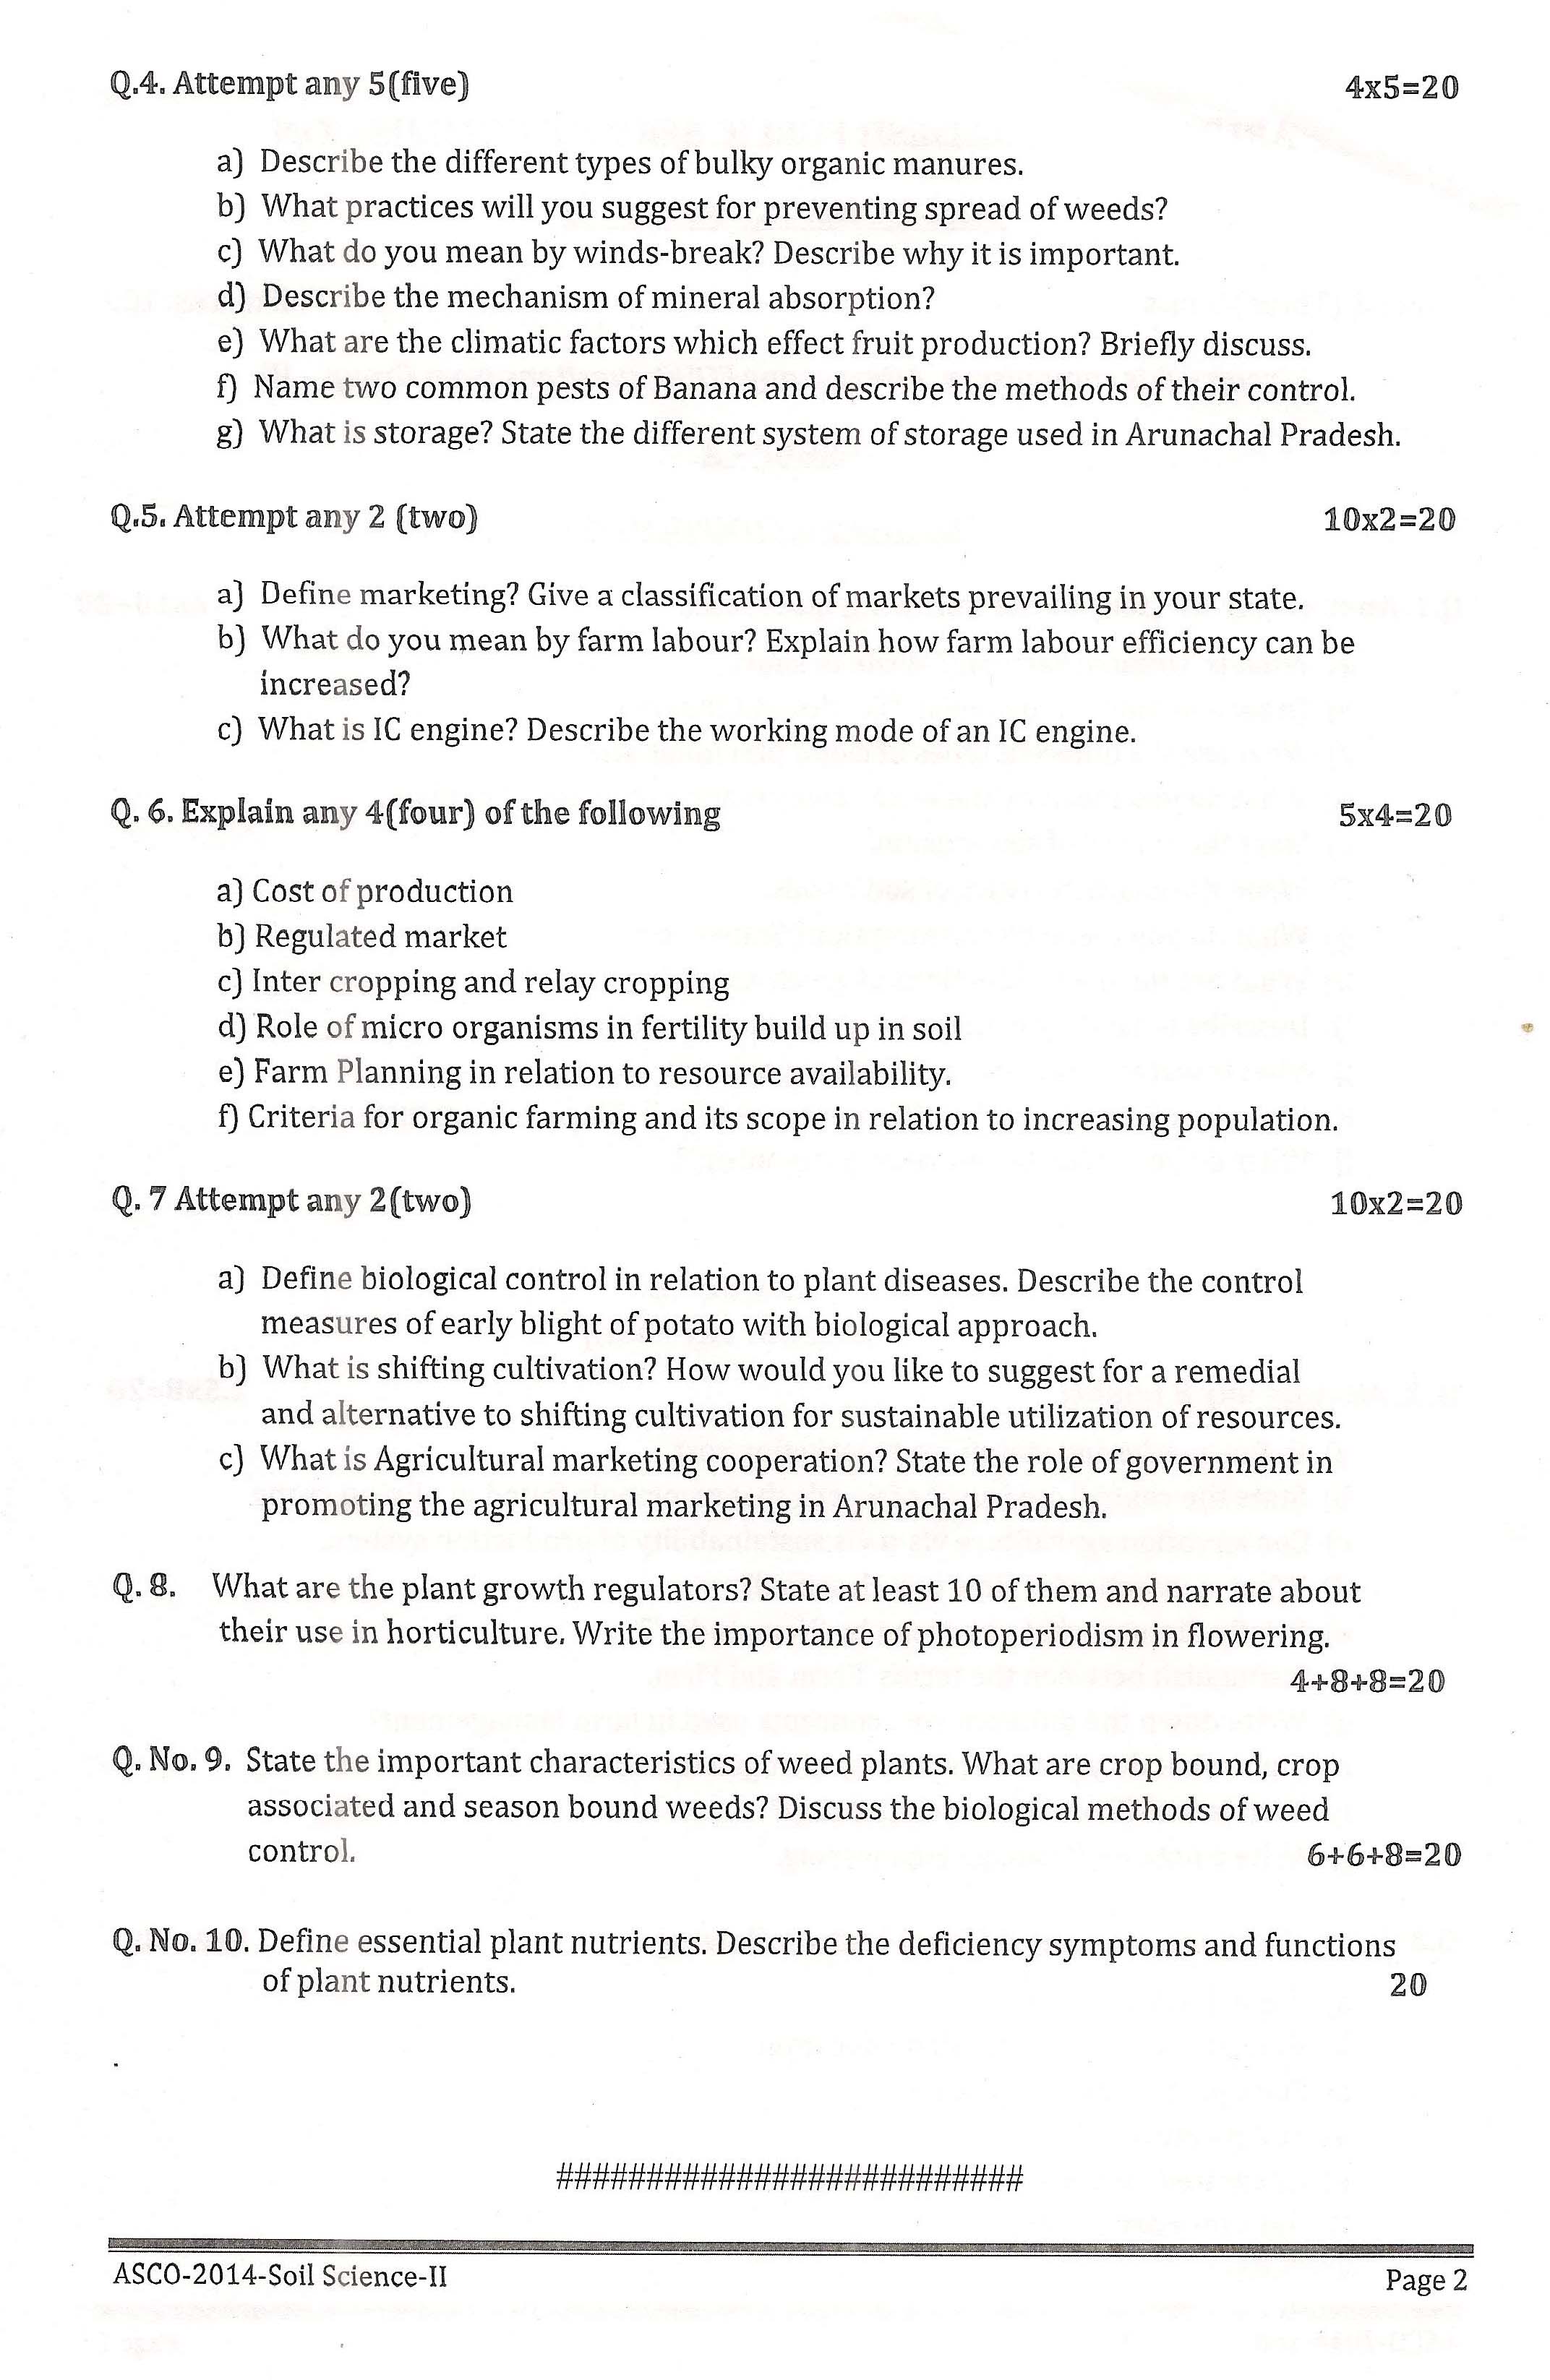 APPSC ASCO Soil Science Paper II Exam Question Paper 2014 2